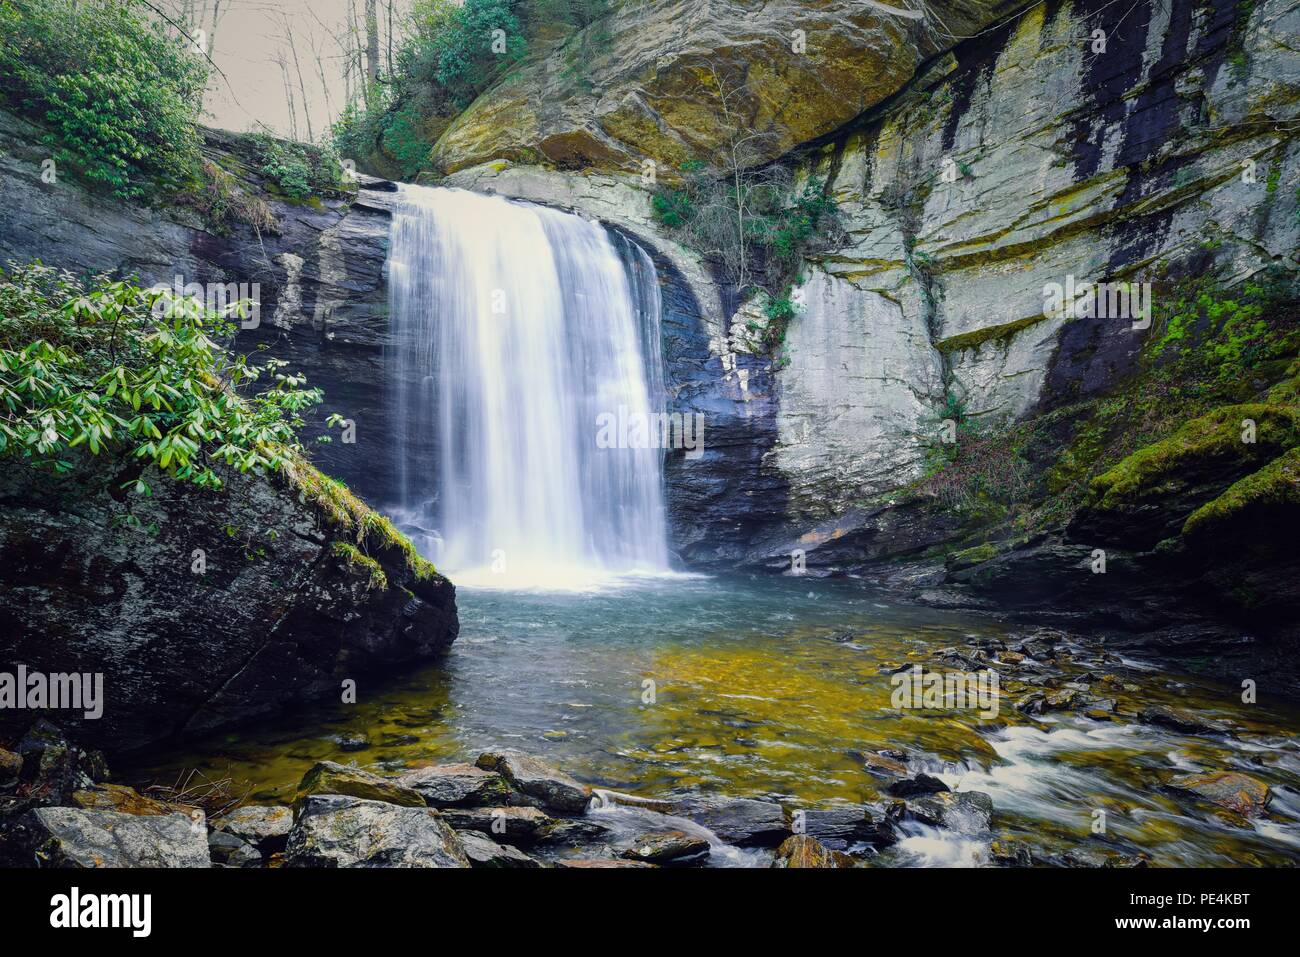 A beautiful waterfall landscape at Looking Glass Falls in North Carolina. Stock Photo